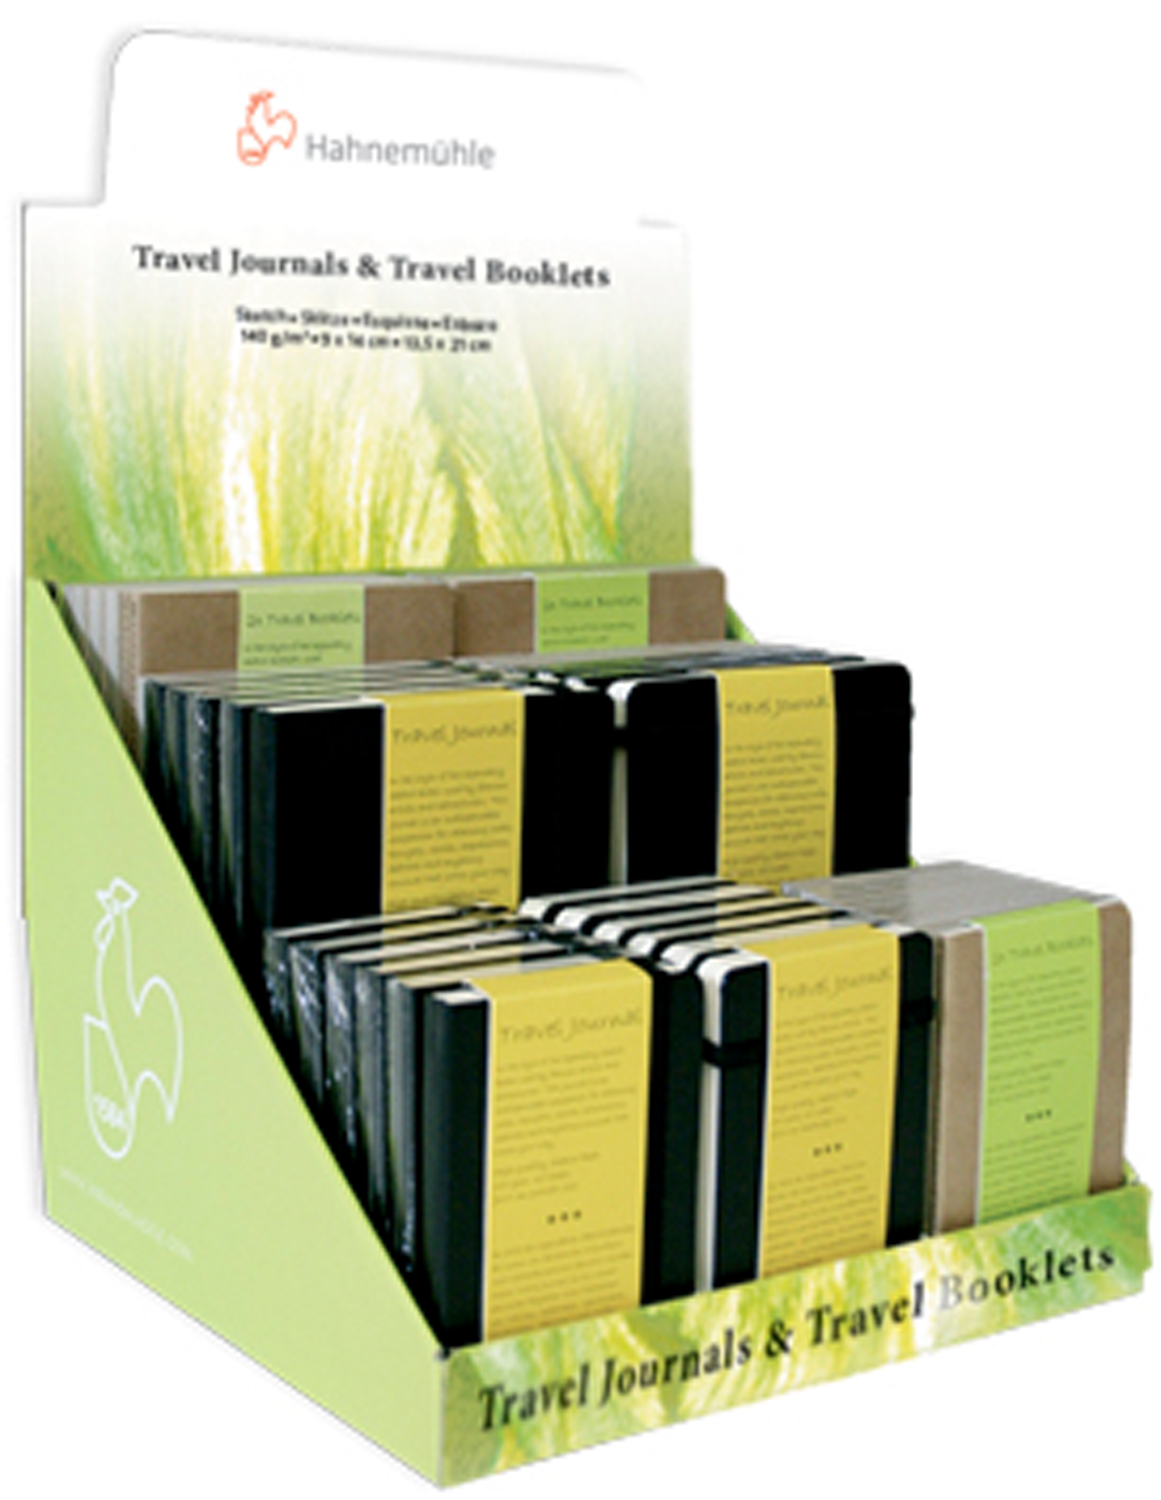 Travel Journals & Travel Booklets - Thekendisplay